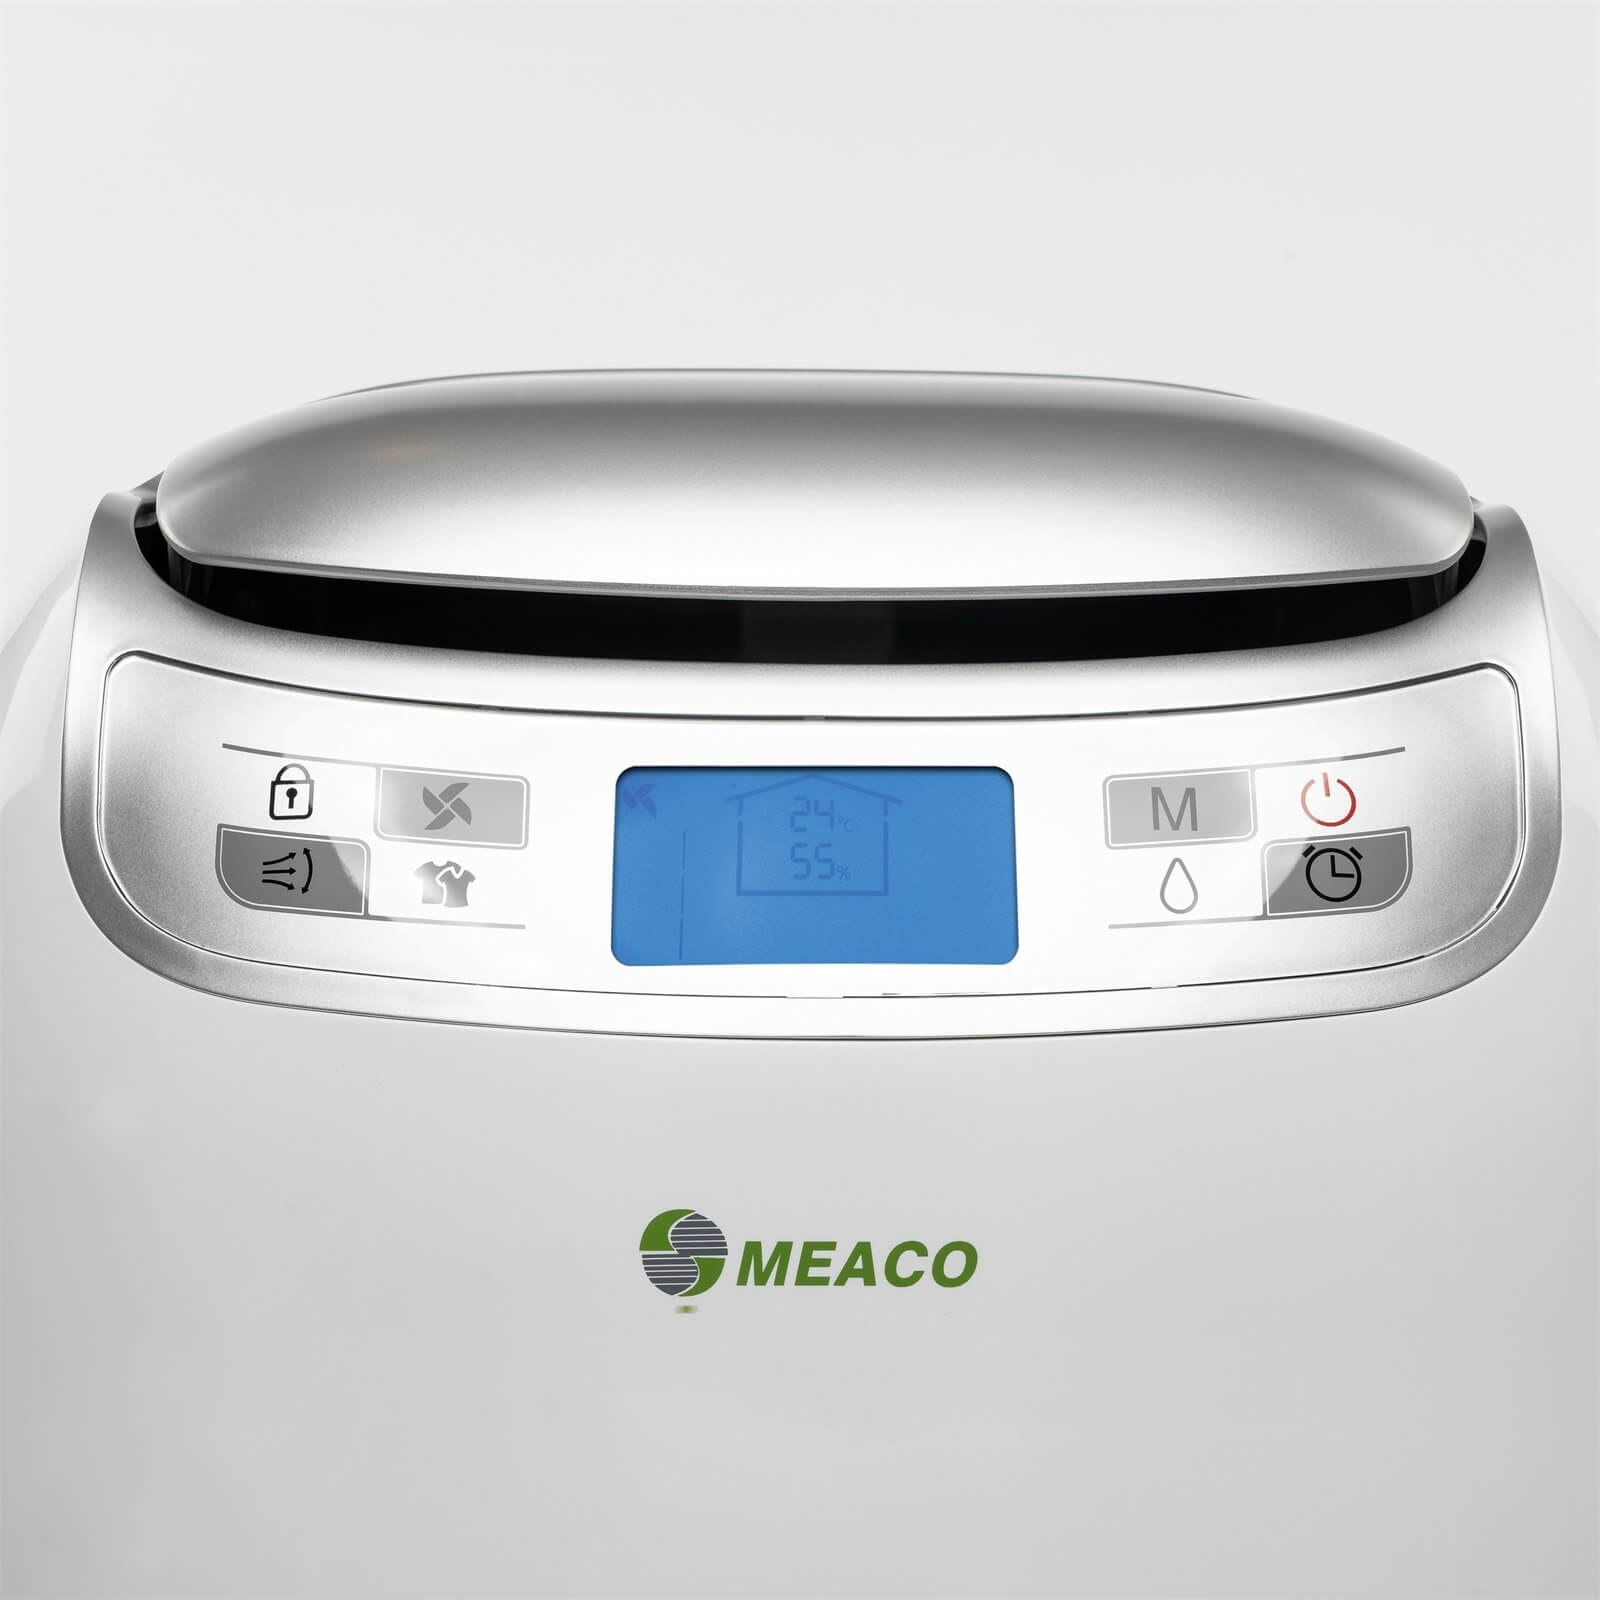 Meaco 25L Ultra Low Energy Dehumidifier